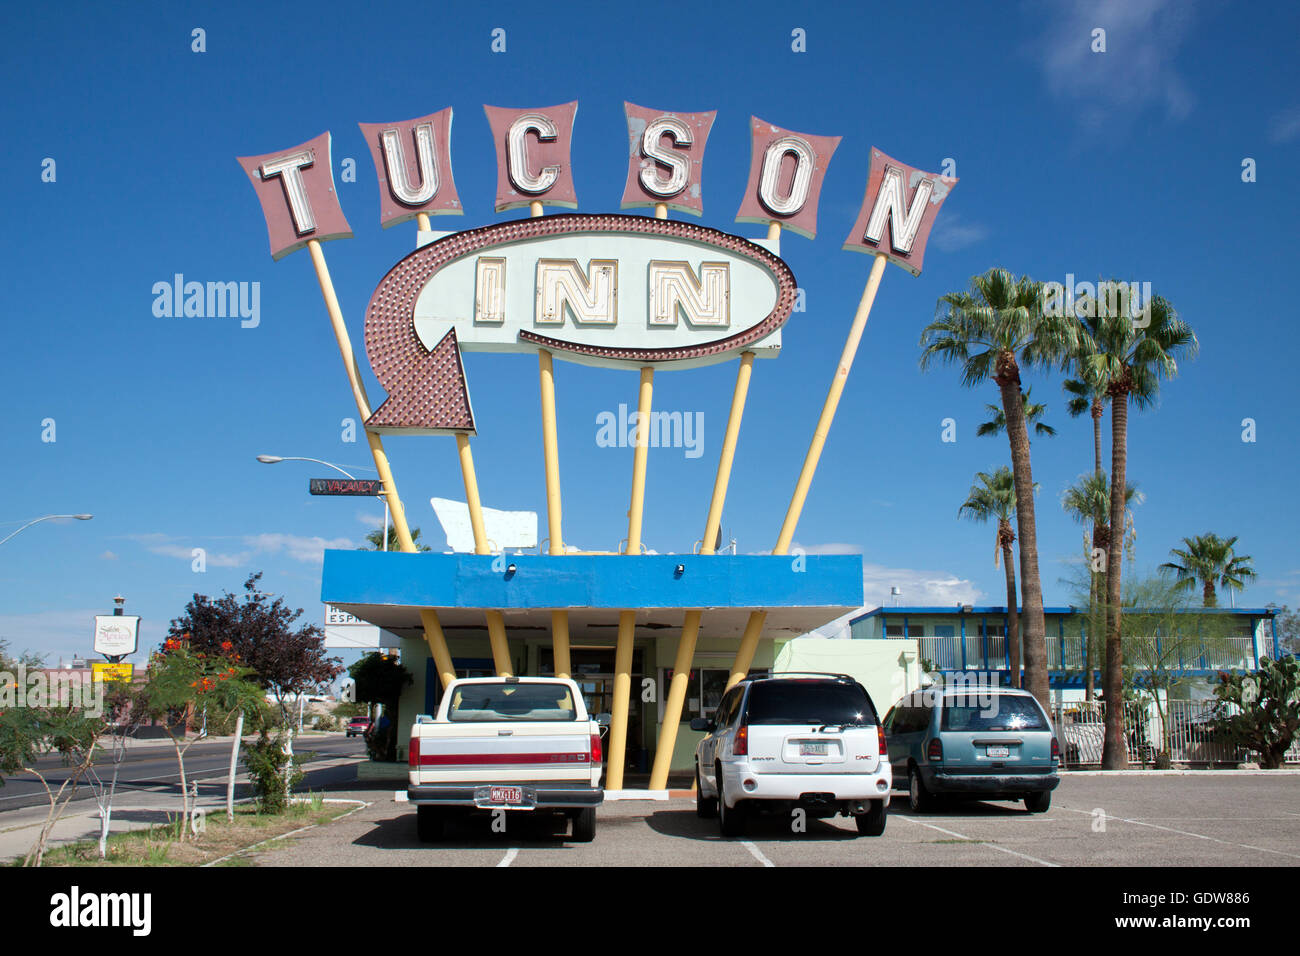 Tucson Inn sign for an old motel in downtown Tucson Arizona Stock Photo